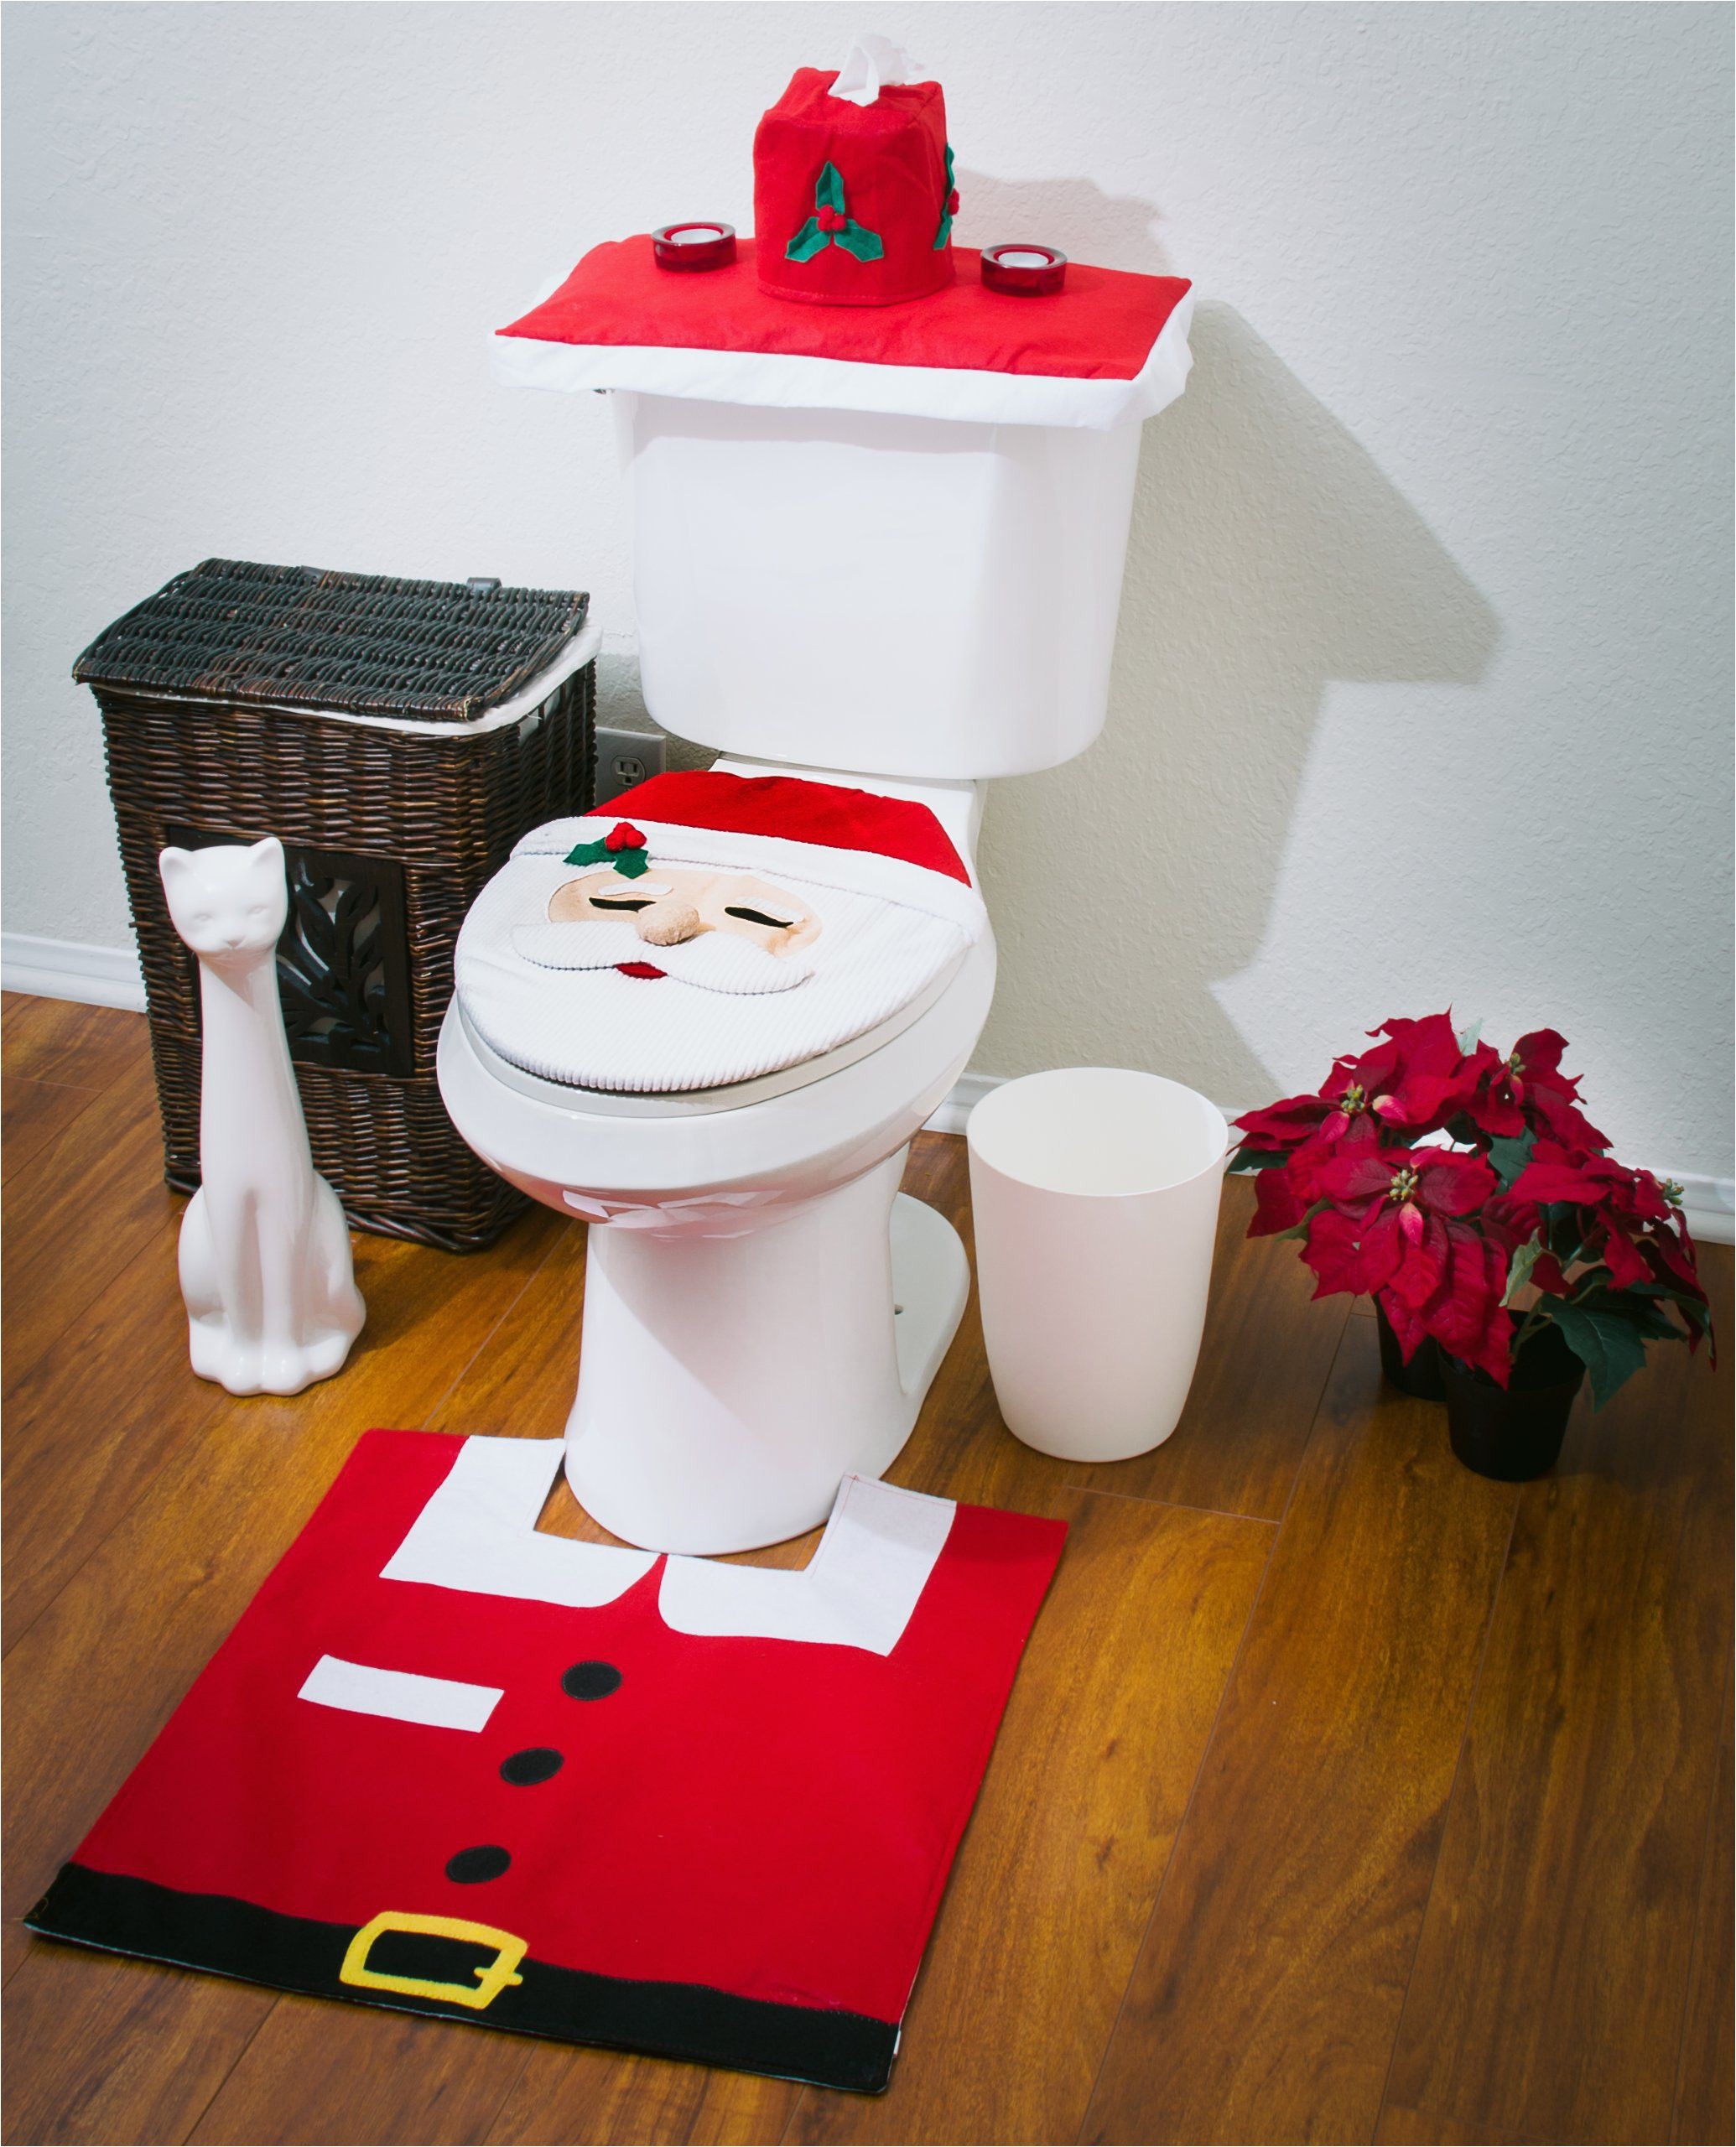 Toilet Seat Cover and Rug Bathroom Set Amazon Santa toilet Seat Cover and Rug Set Bathroom